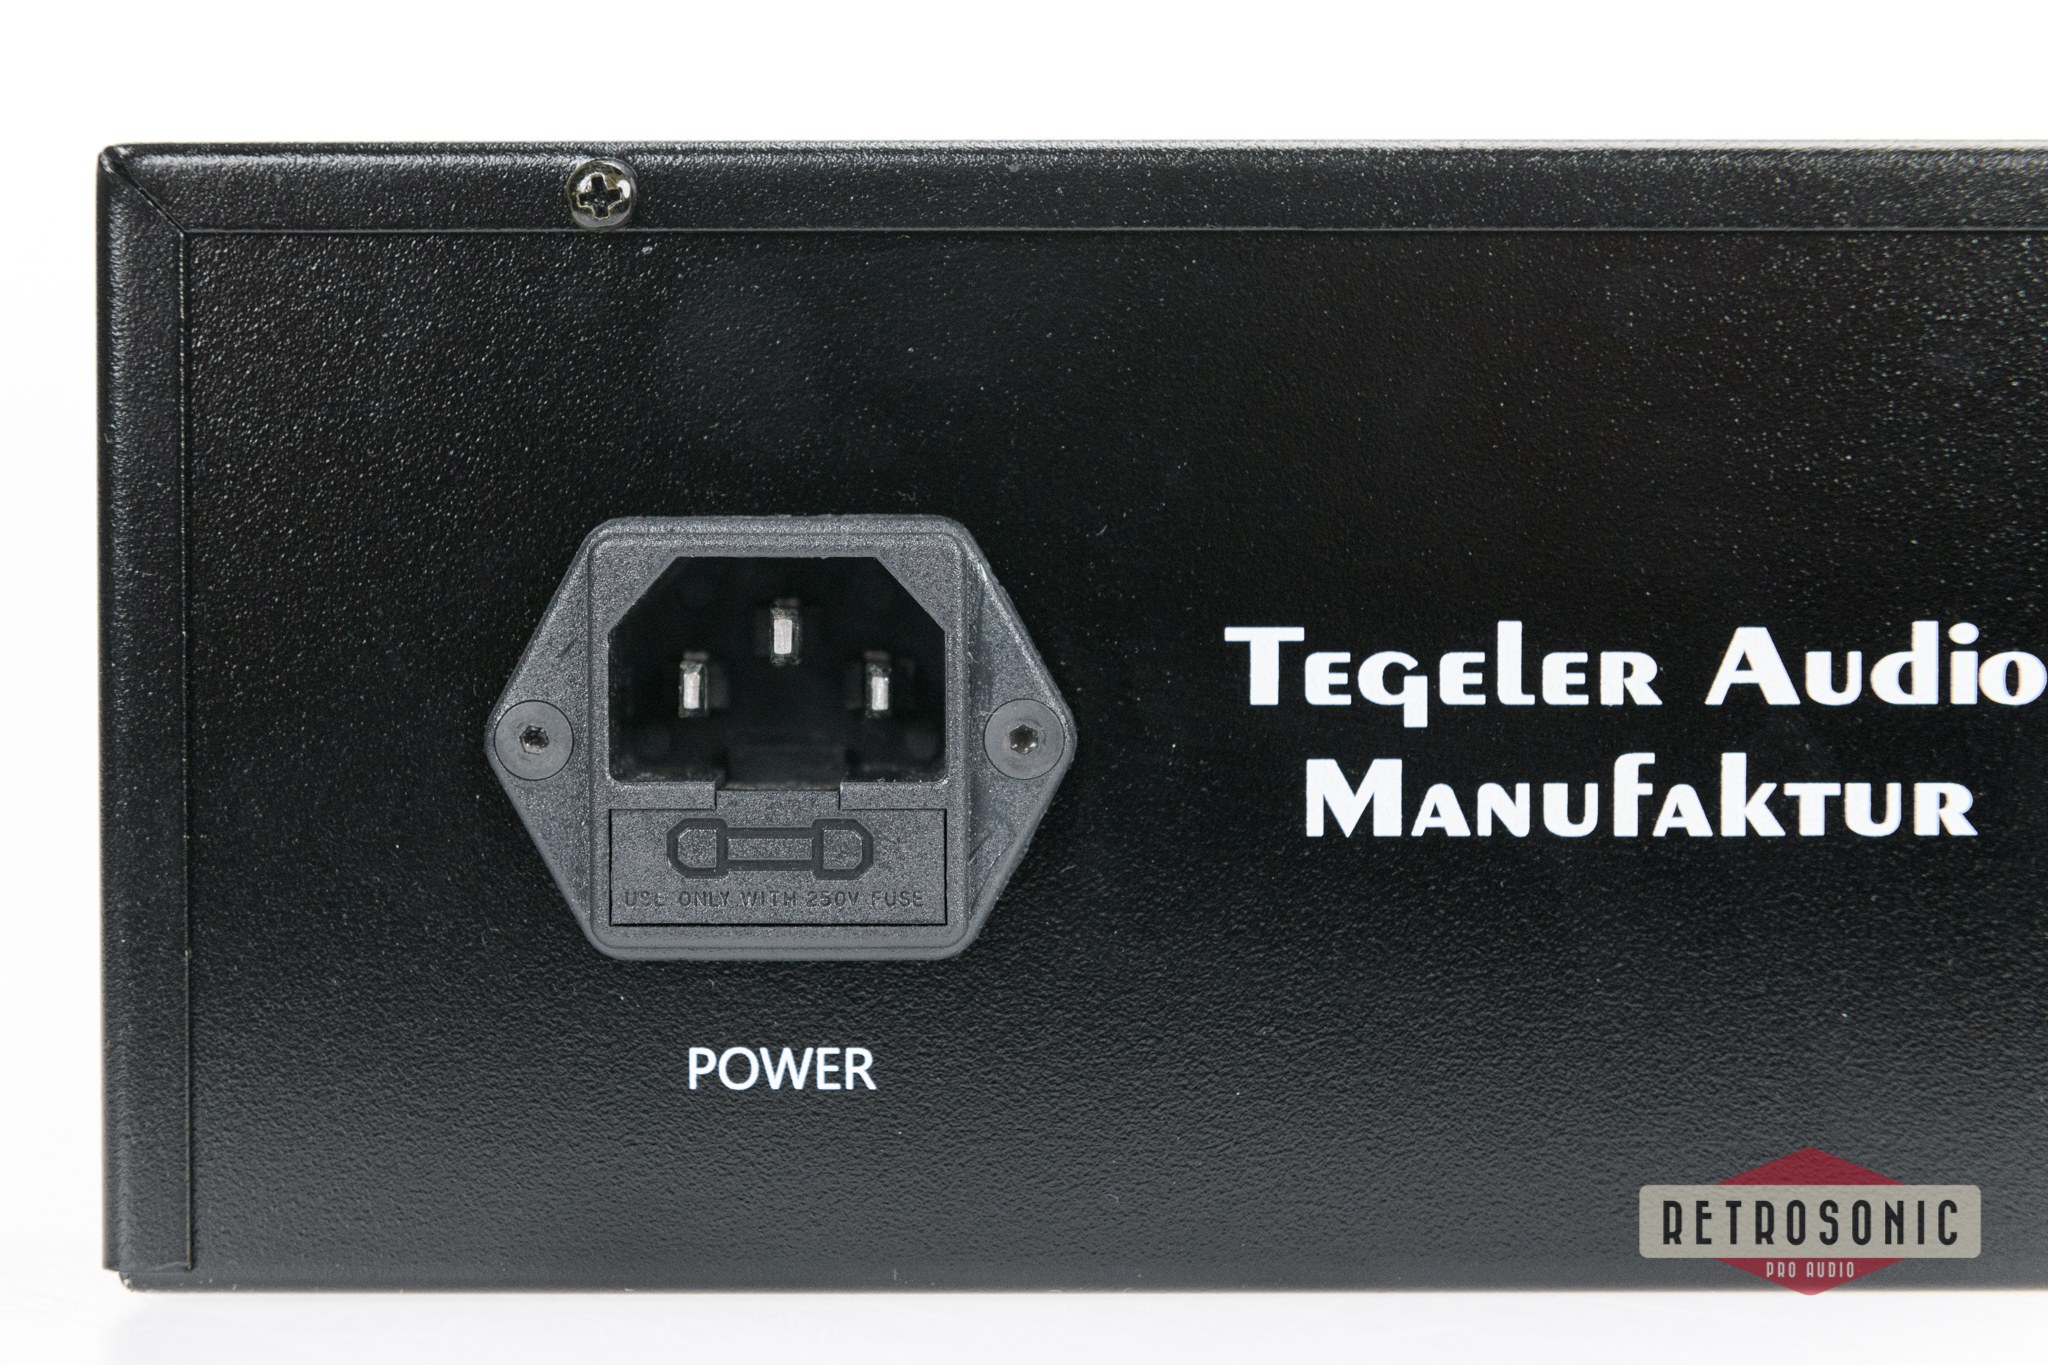 Tegeler Audio Magnetismus 2 (2018)